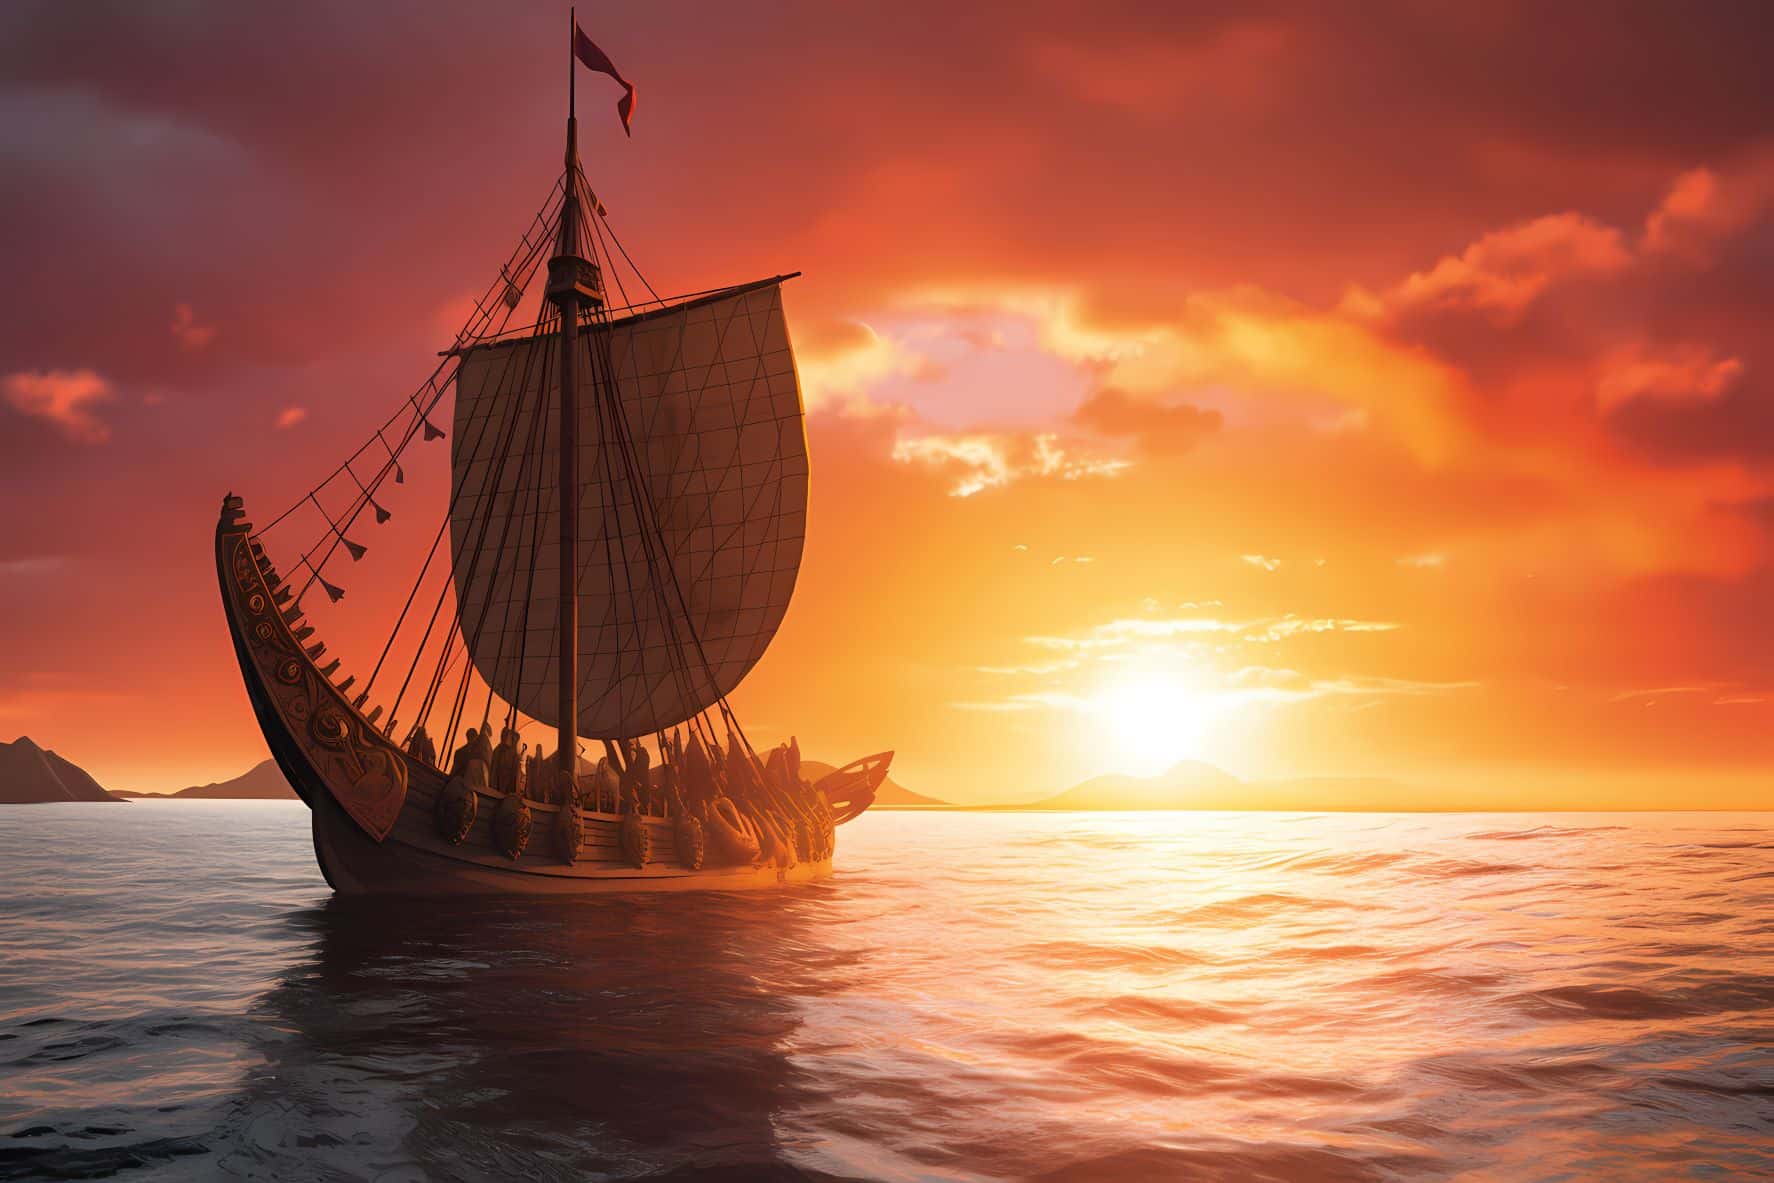 Viking Longship Design was world class